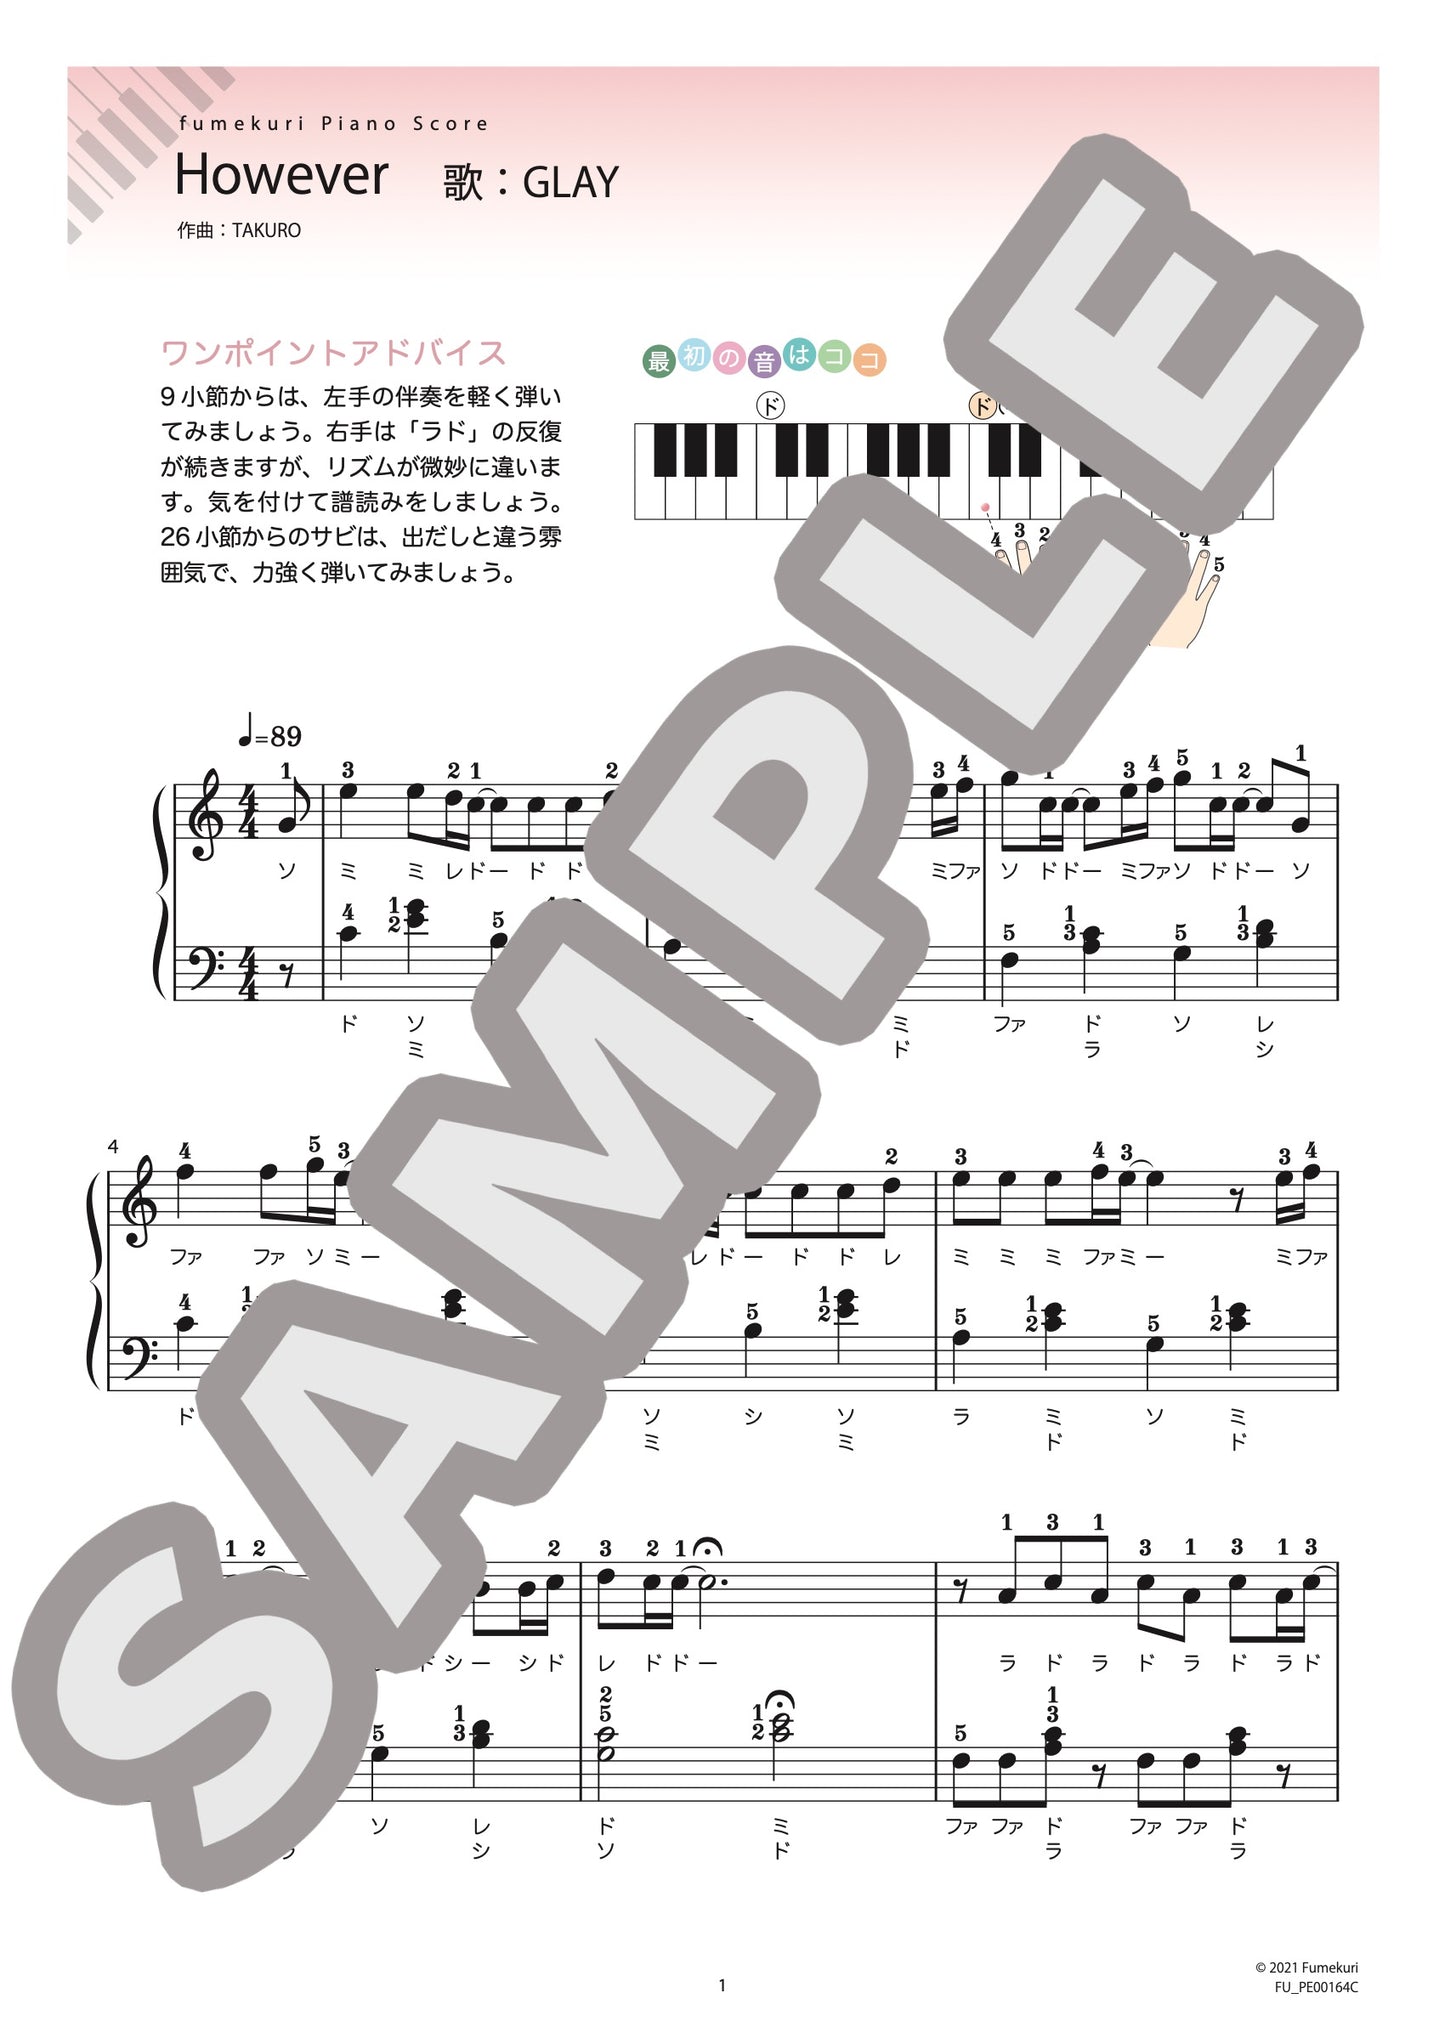 However（GLAY) / ピアノ・ソロ【初級】